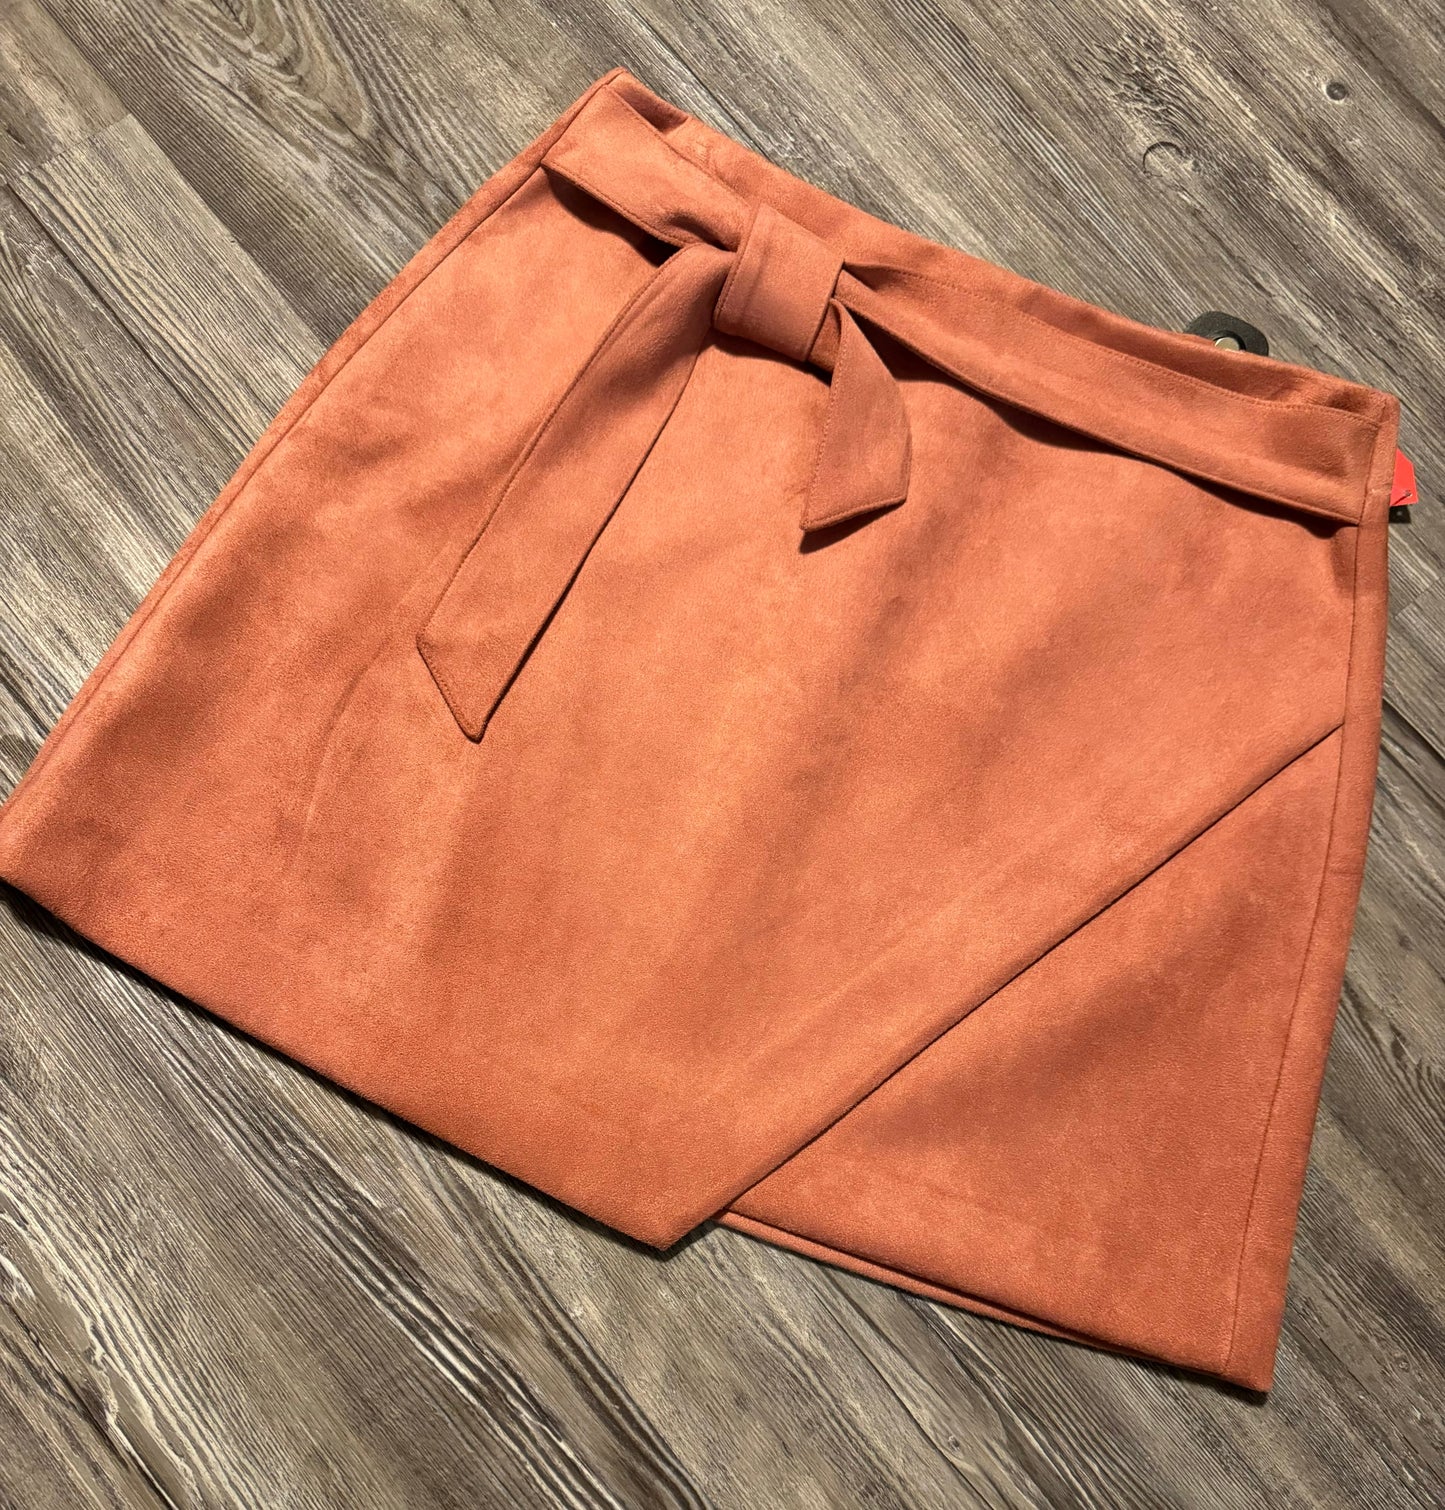 Skirt Mini & Short By Loft O  Size: 6